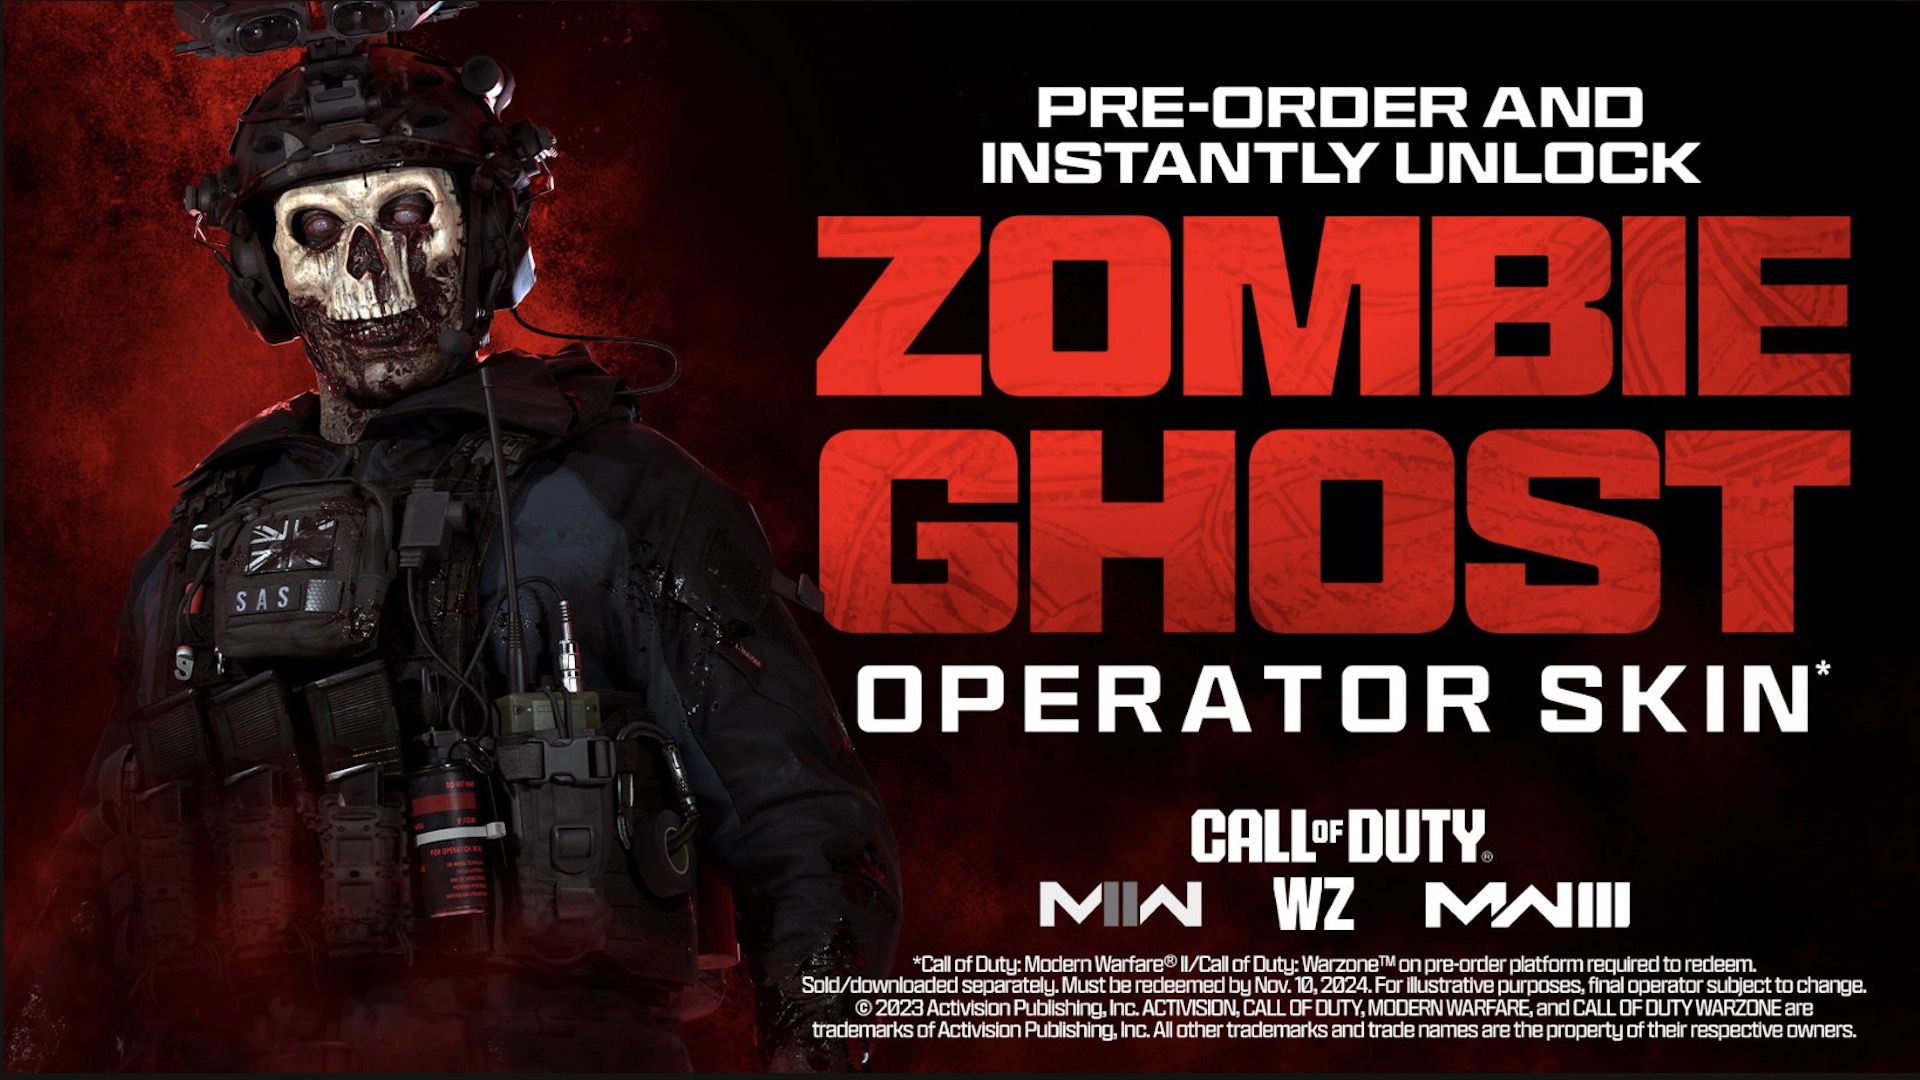 The Zombie Ghost Operator in Modern Warfare 3